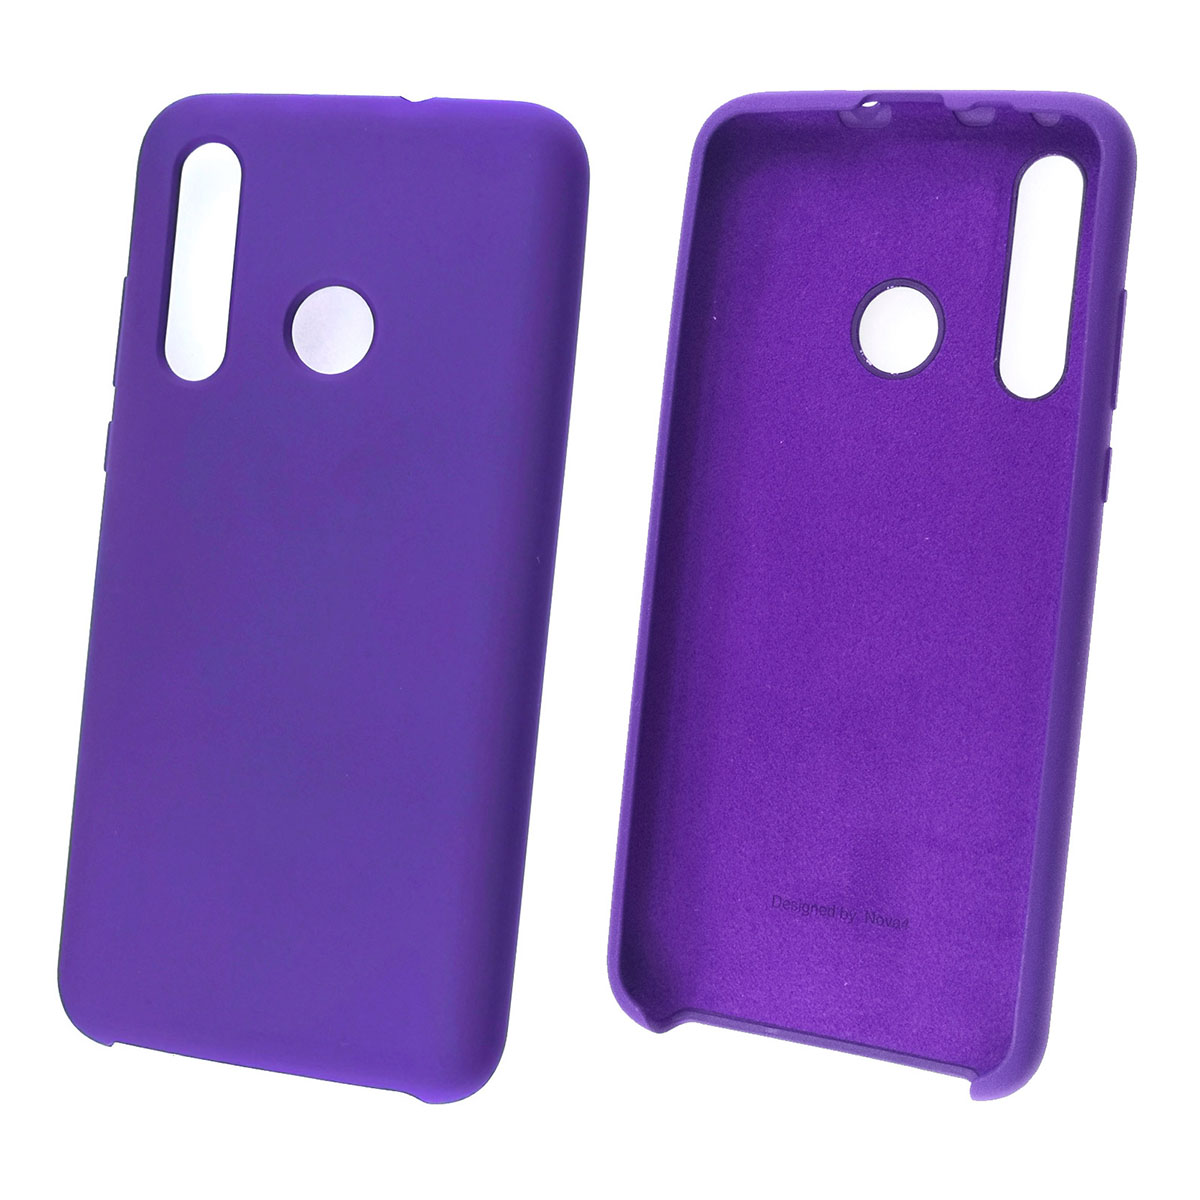 Чехол накладка для HUAWEI Nova 4 2019 (VCE-LX1), силикон, бархат, цвет фиолетовый.